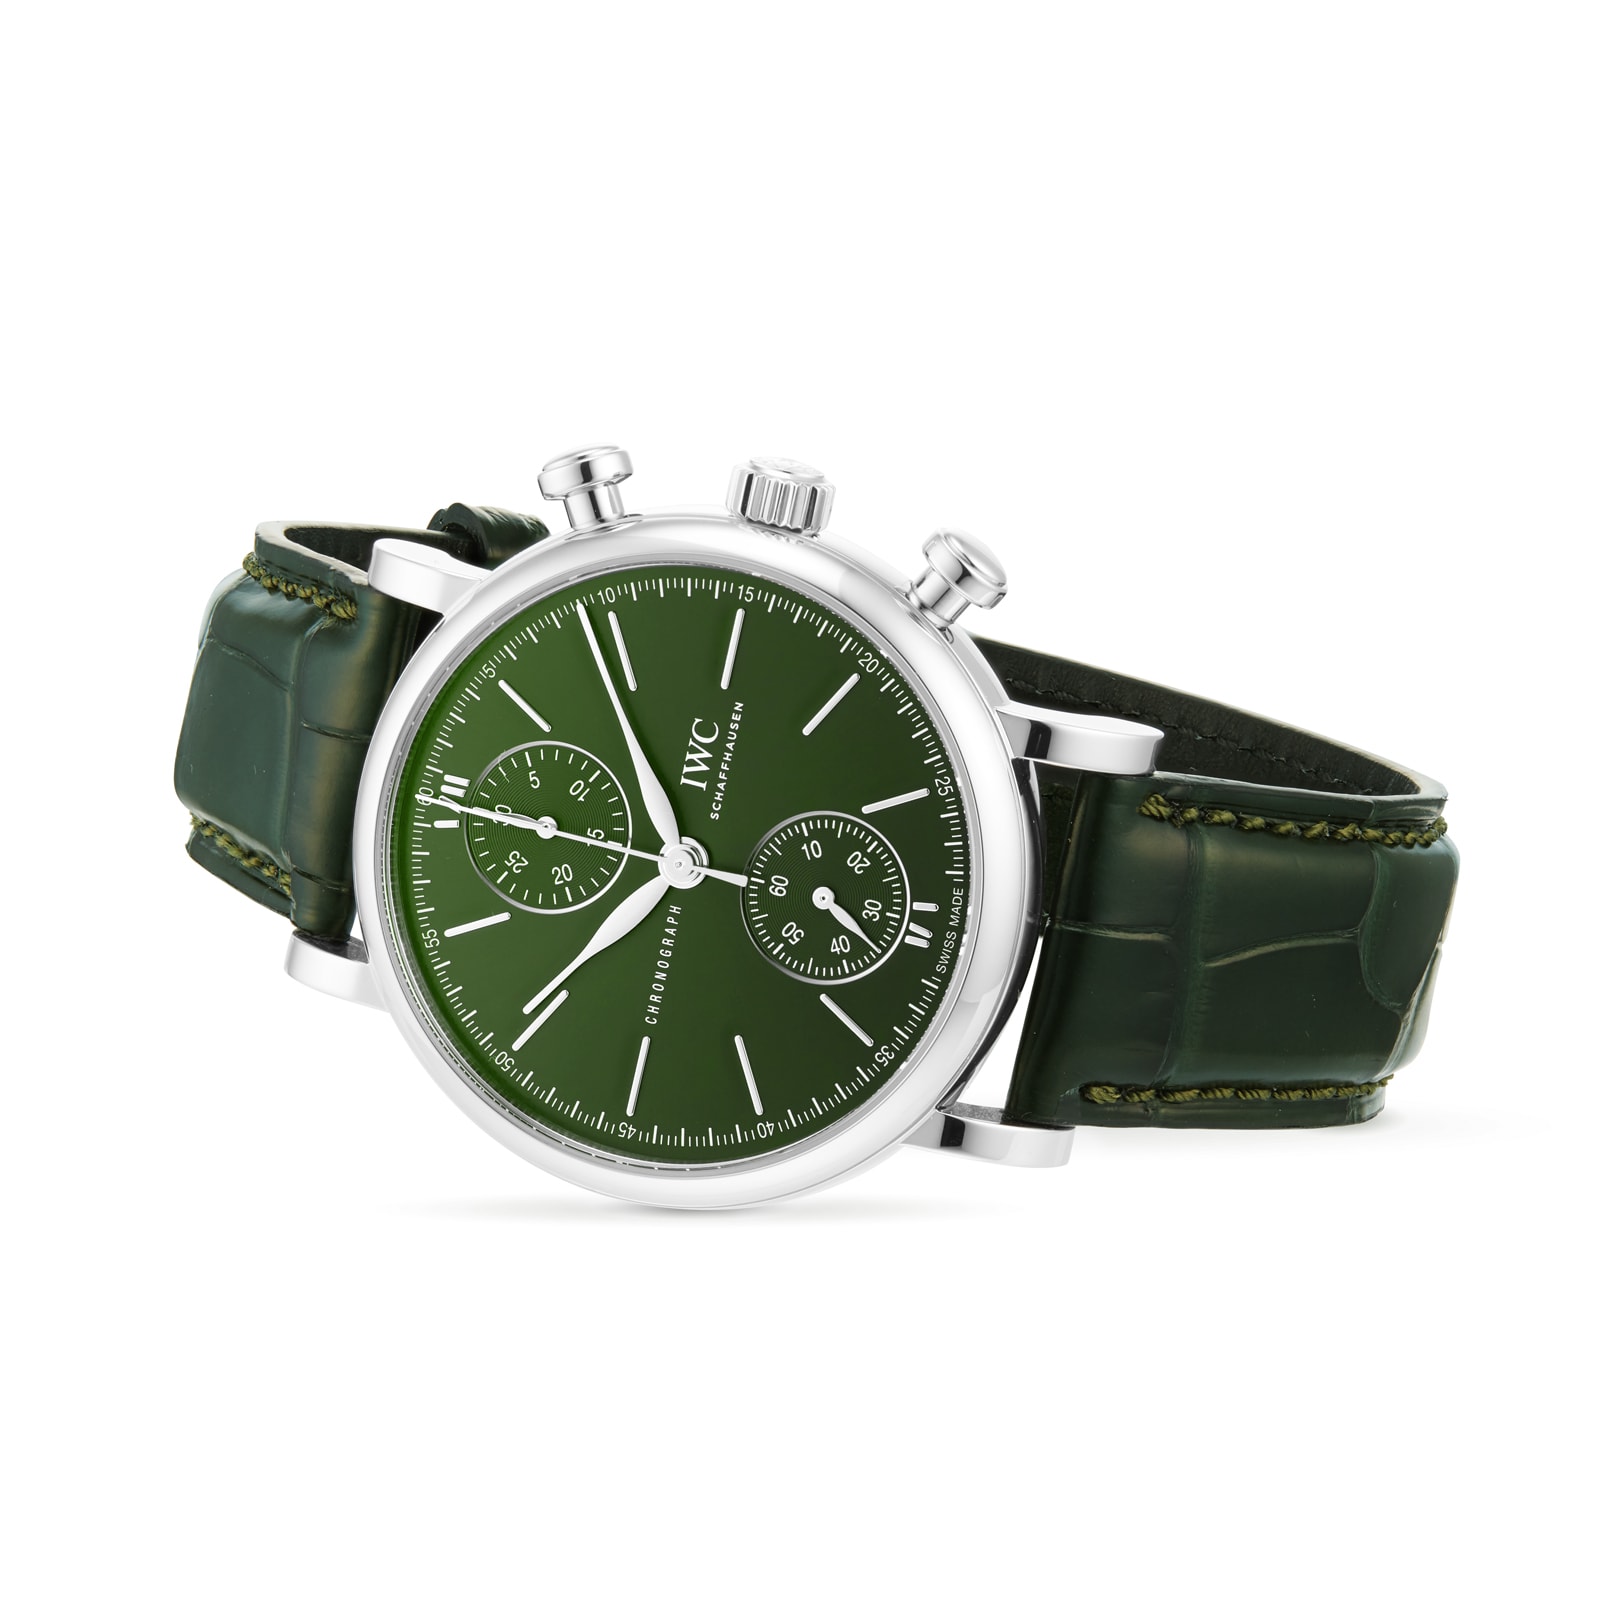 IWC: New Portofino Midsize Timepiece Collections